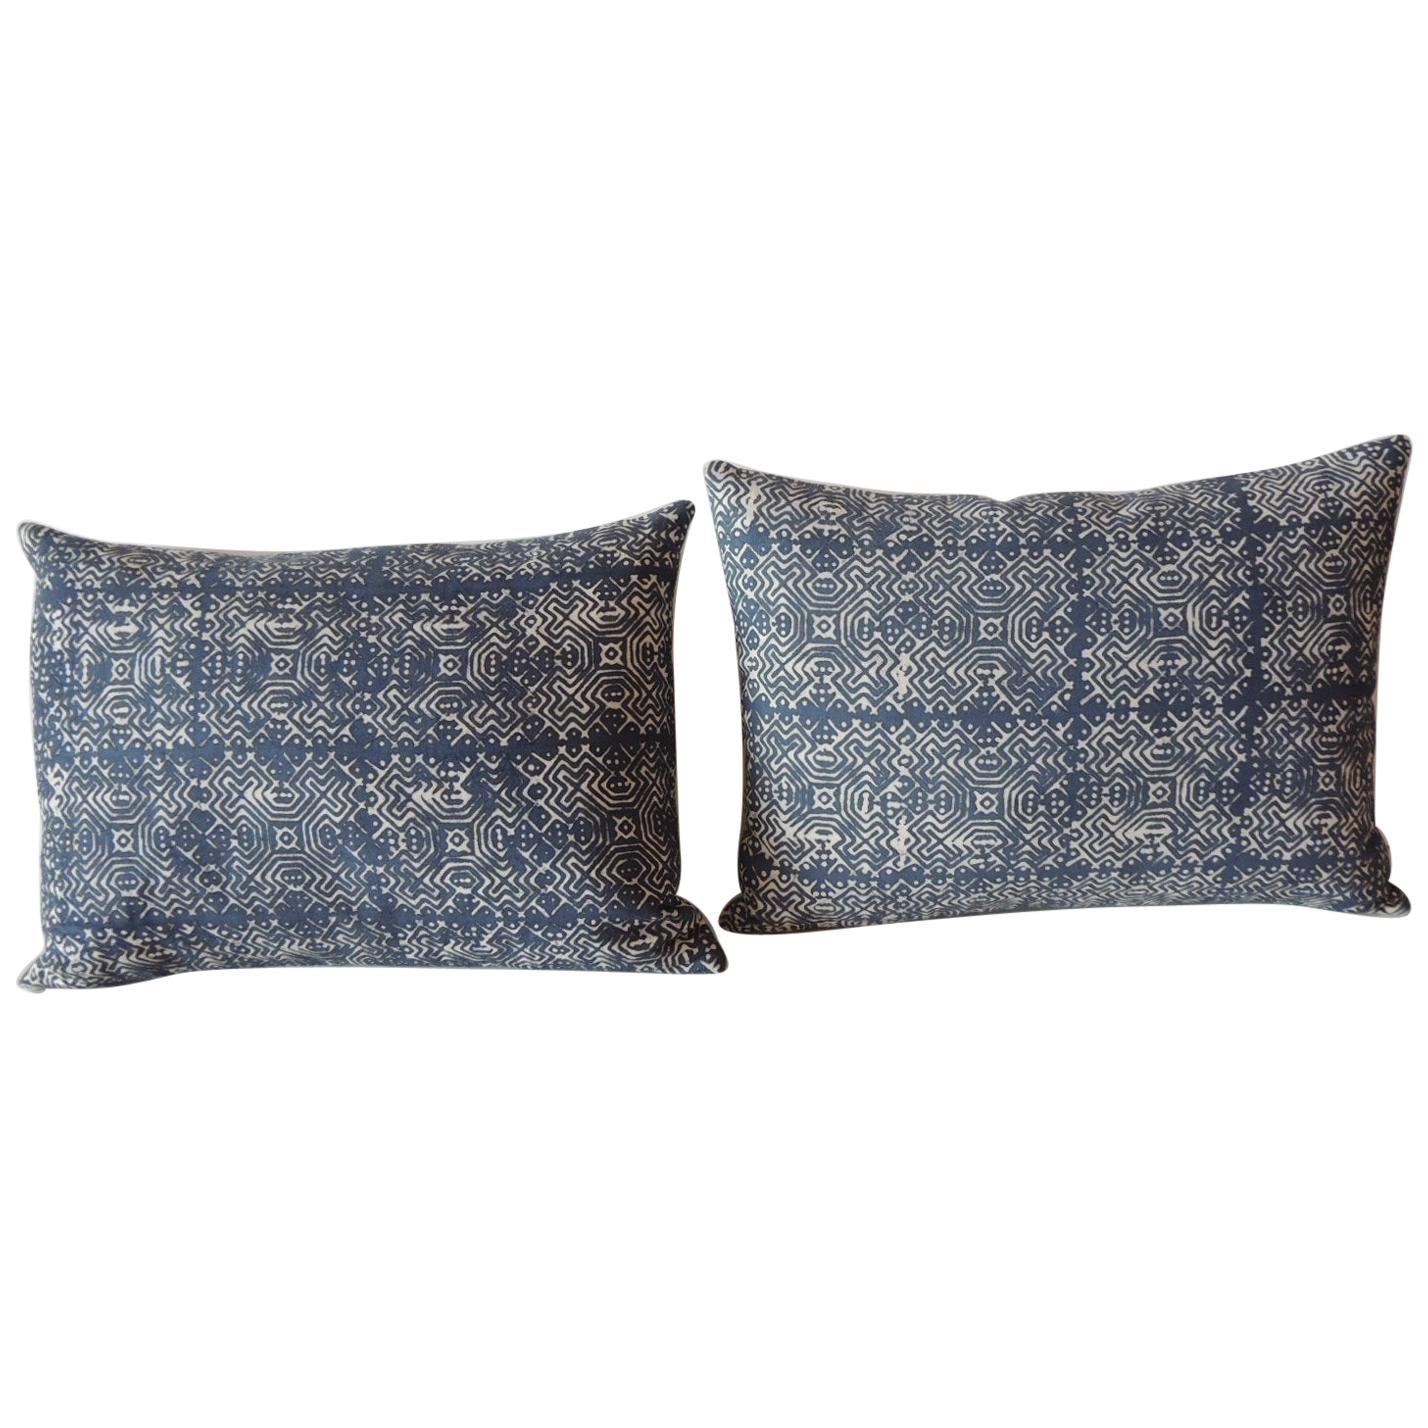 Pair of Vintage Blue and White Petite Hand-Blocked Batik Decorative Pillows